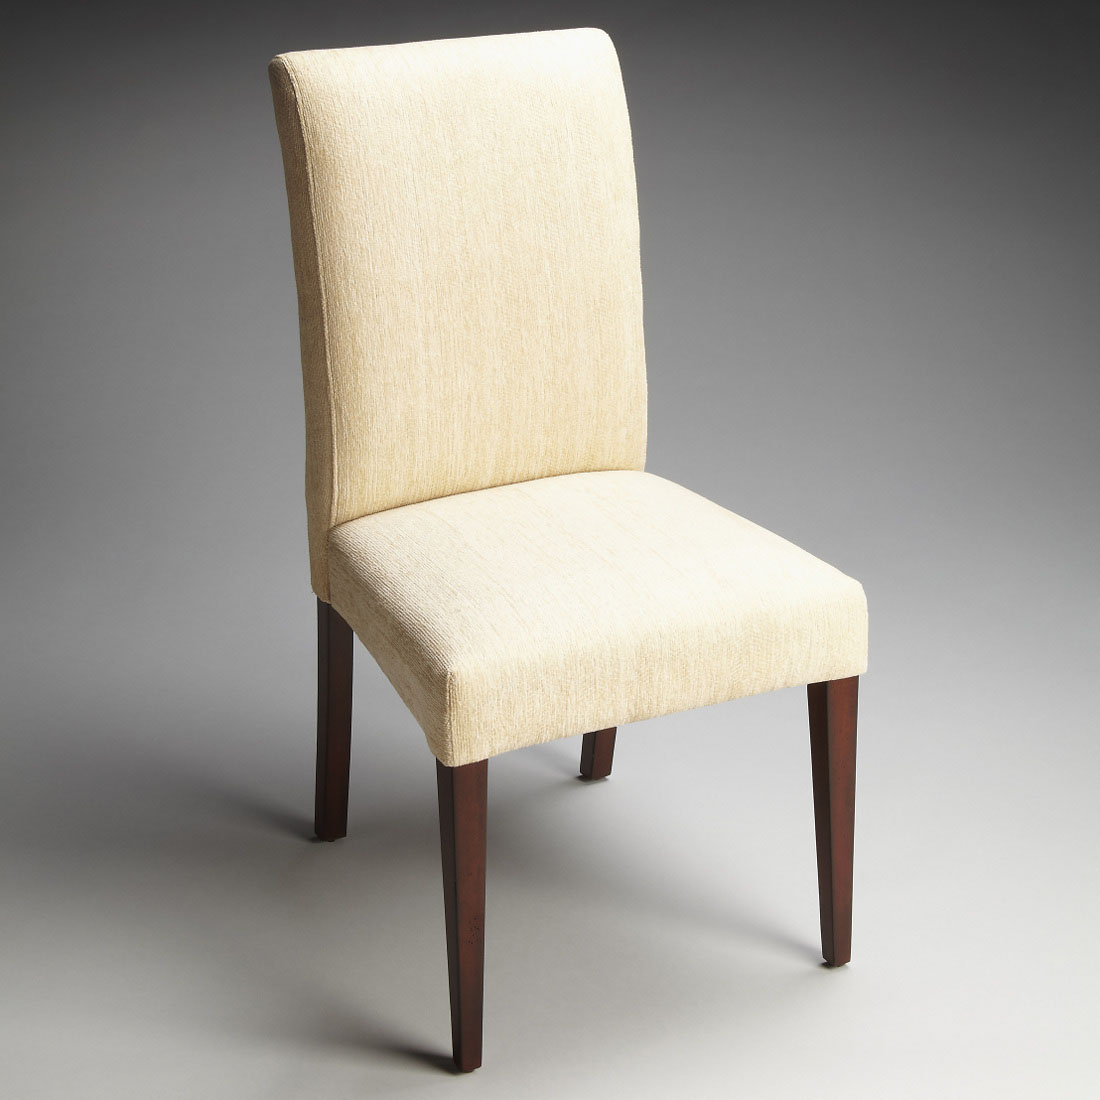 Ivory Accent Chair - Decor Ideas